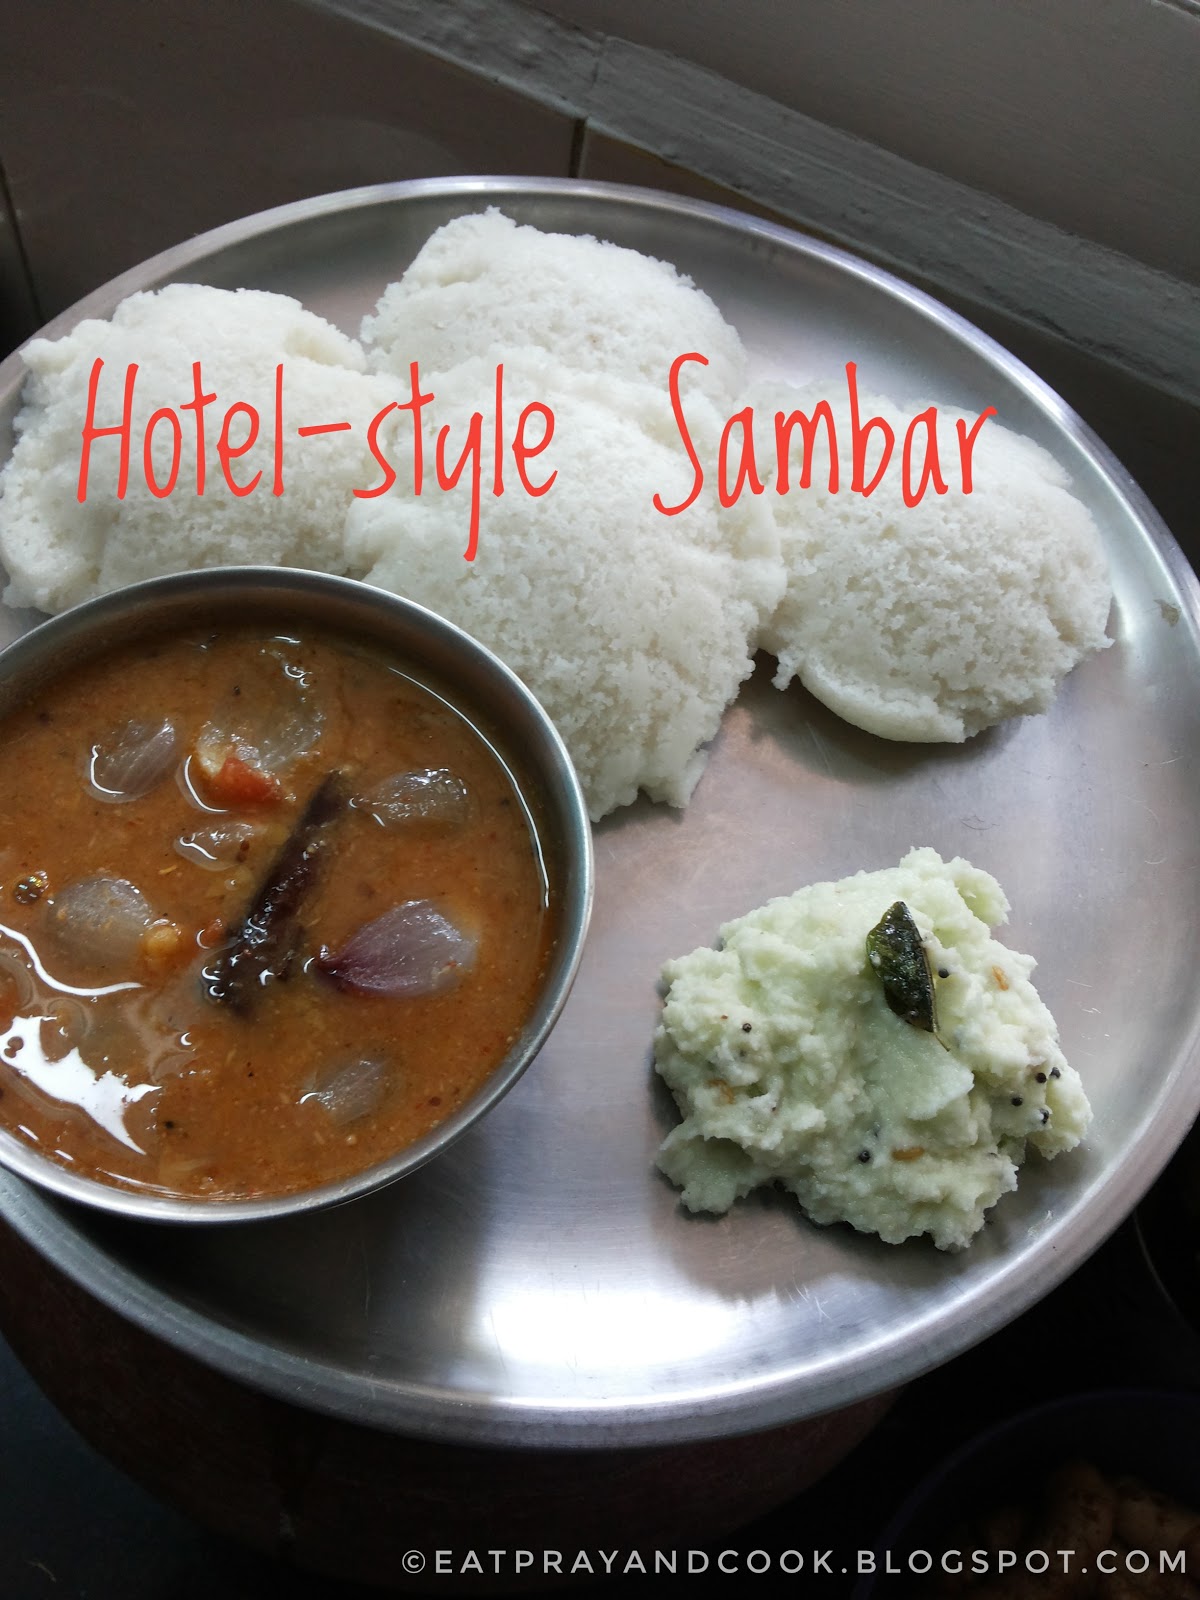 Eat Pray and Cook: Tiffin Sambar for Idli/Dosa - Hotel Style